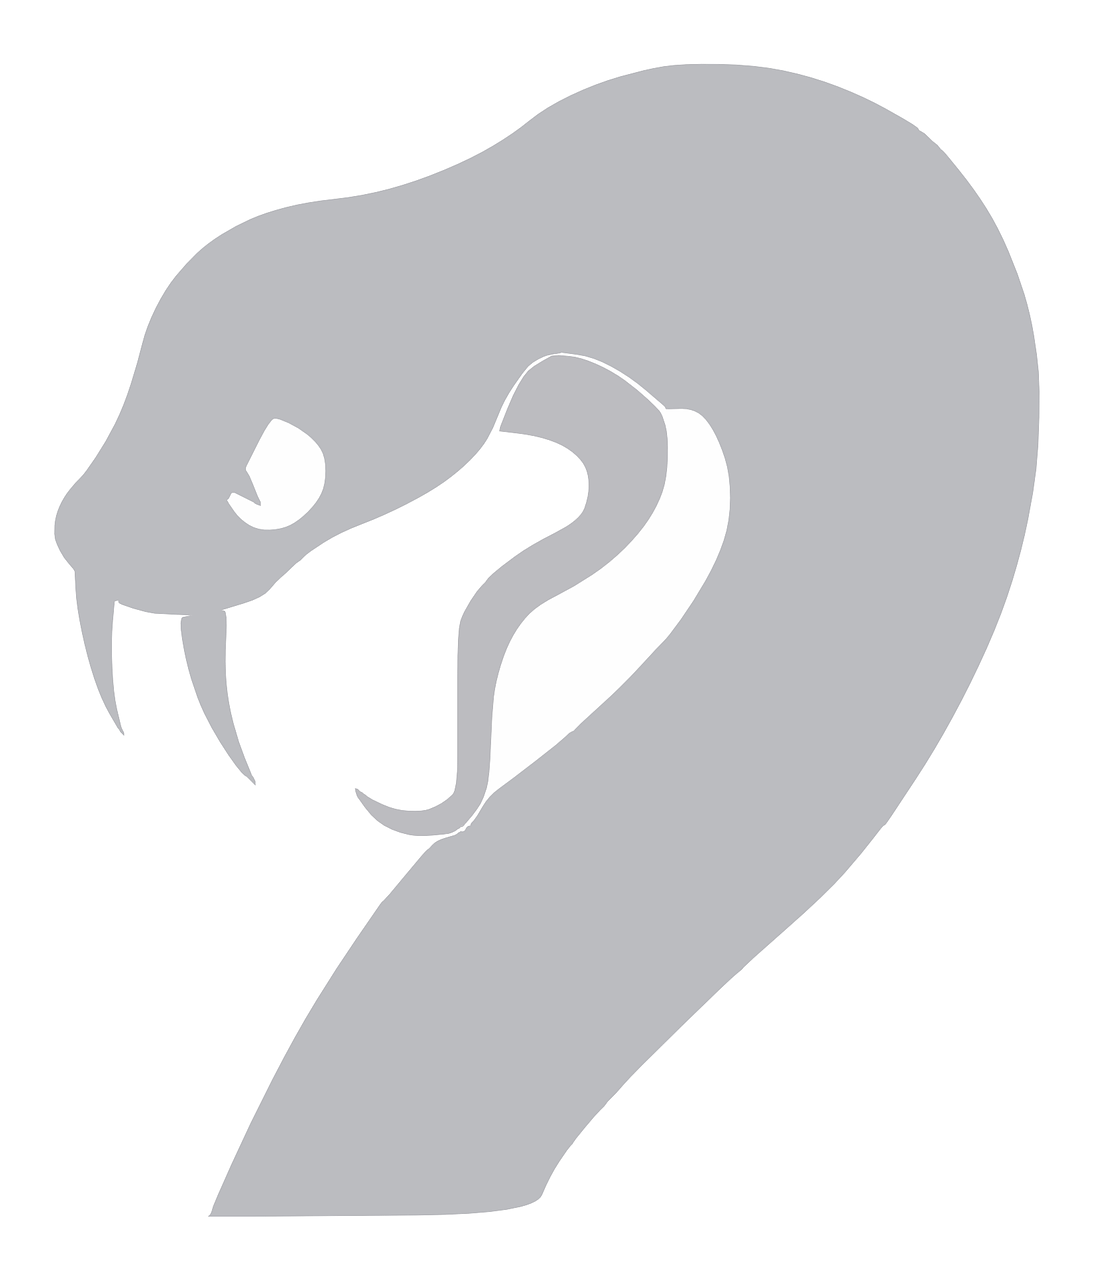 viper snake silhouette free photo